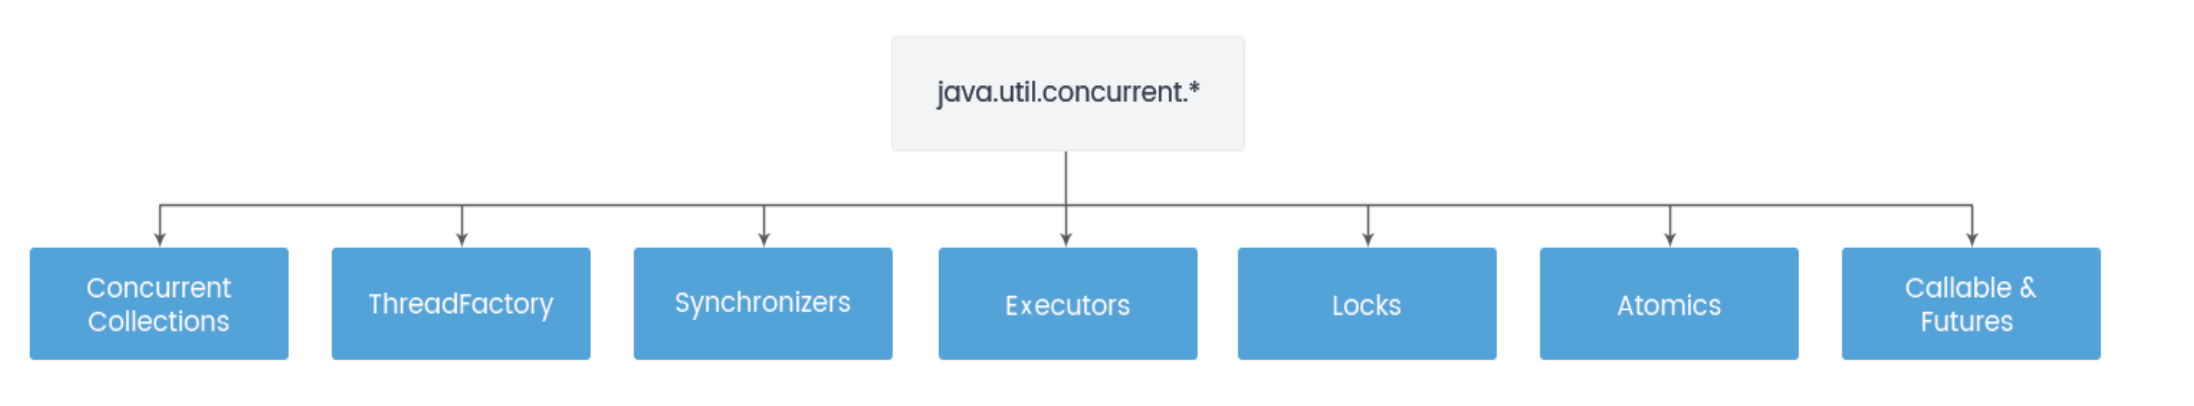 Collection utils. Коллекции concurrent java. Java util concurrent. Пакеты java. Потокобезопасные коллекции java.